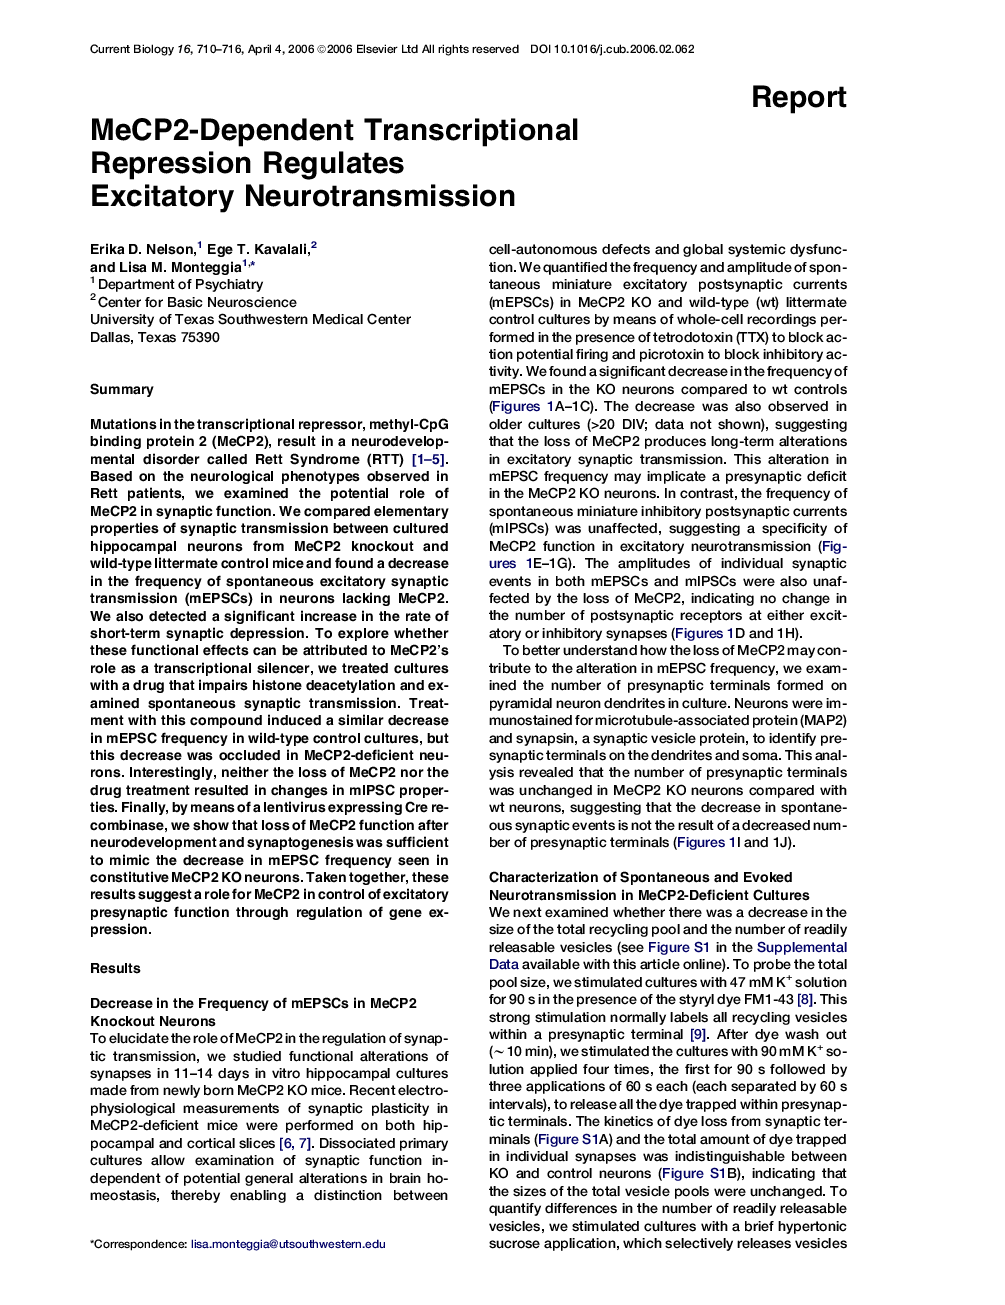 MeCP2-Dependent Transcriptional Repression Regulates Excitatory Neurotransmission